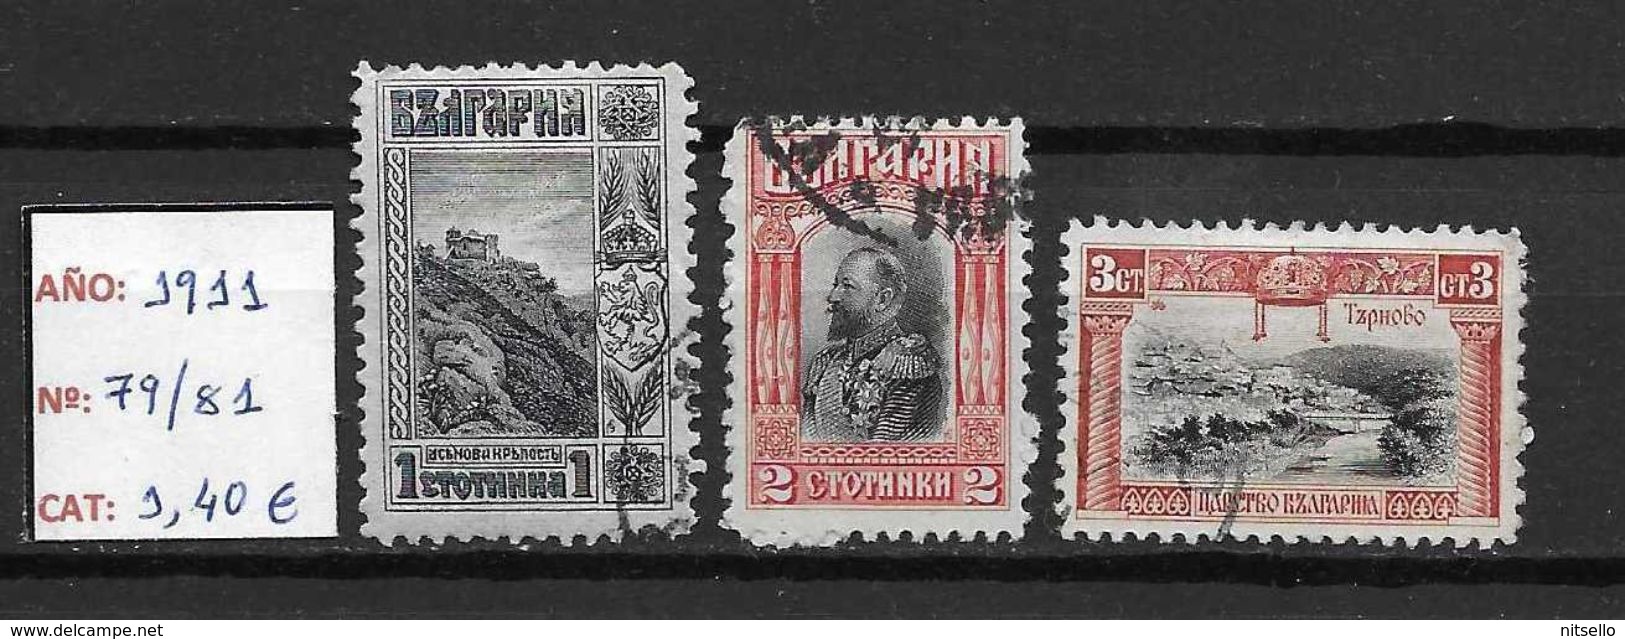 LOTE 1419  ///  BULGARIA  1910       YVERT Nº: 79/81     //    CATALOG./COTE: 1,40 €           ¡¡¡LIQUIDATION!!! - Used Stamps